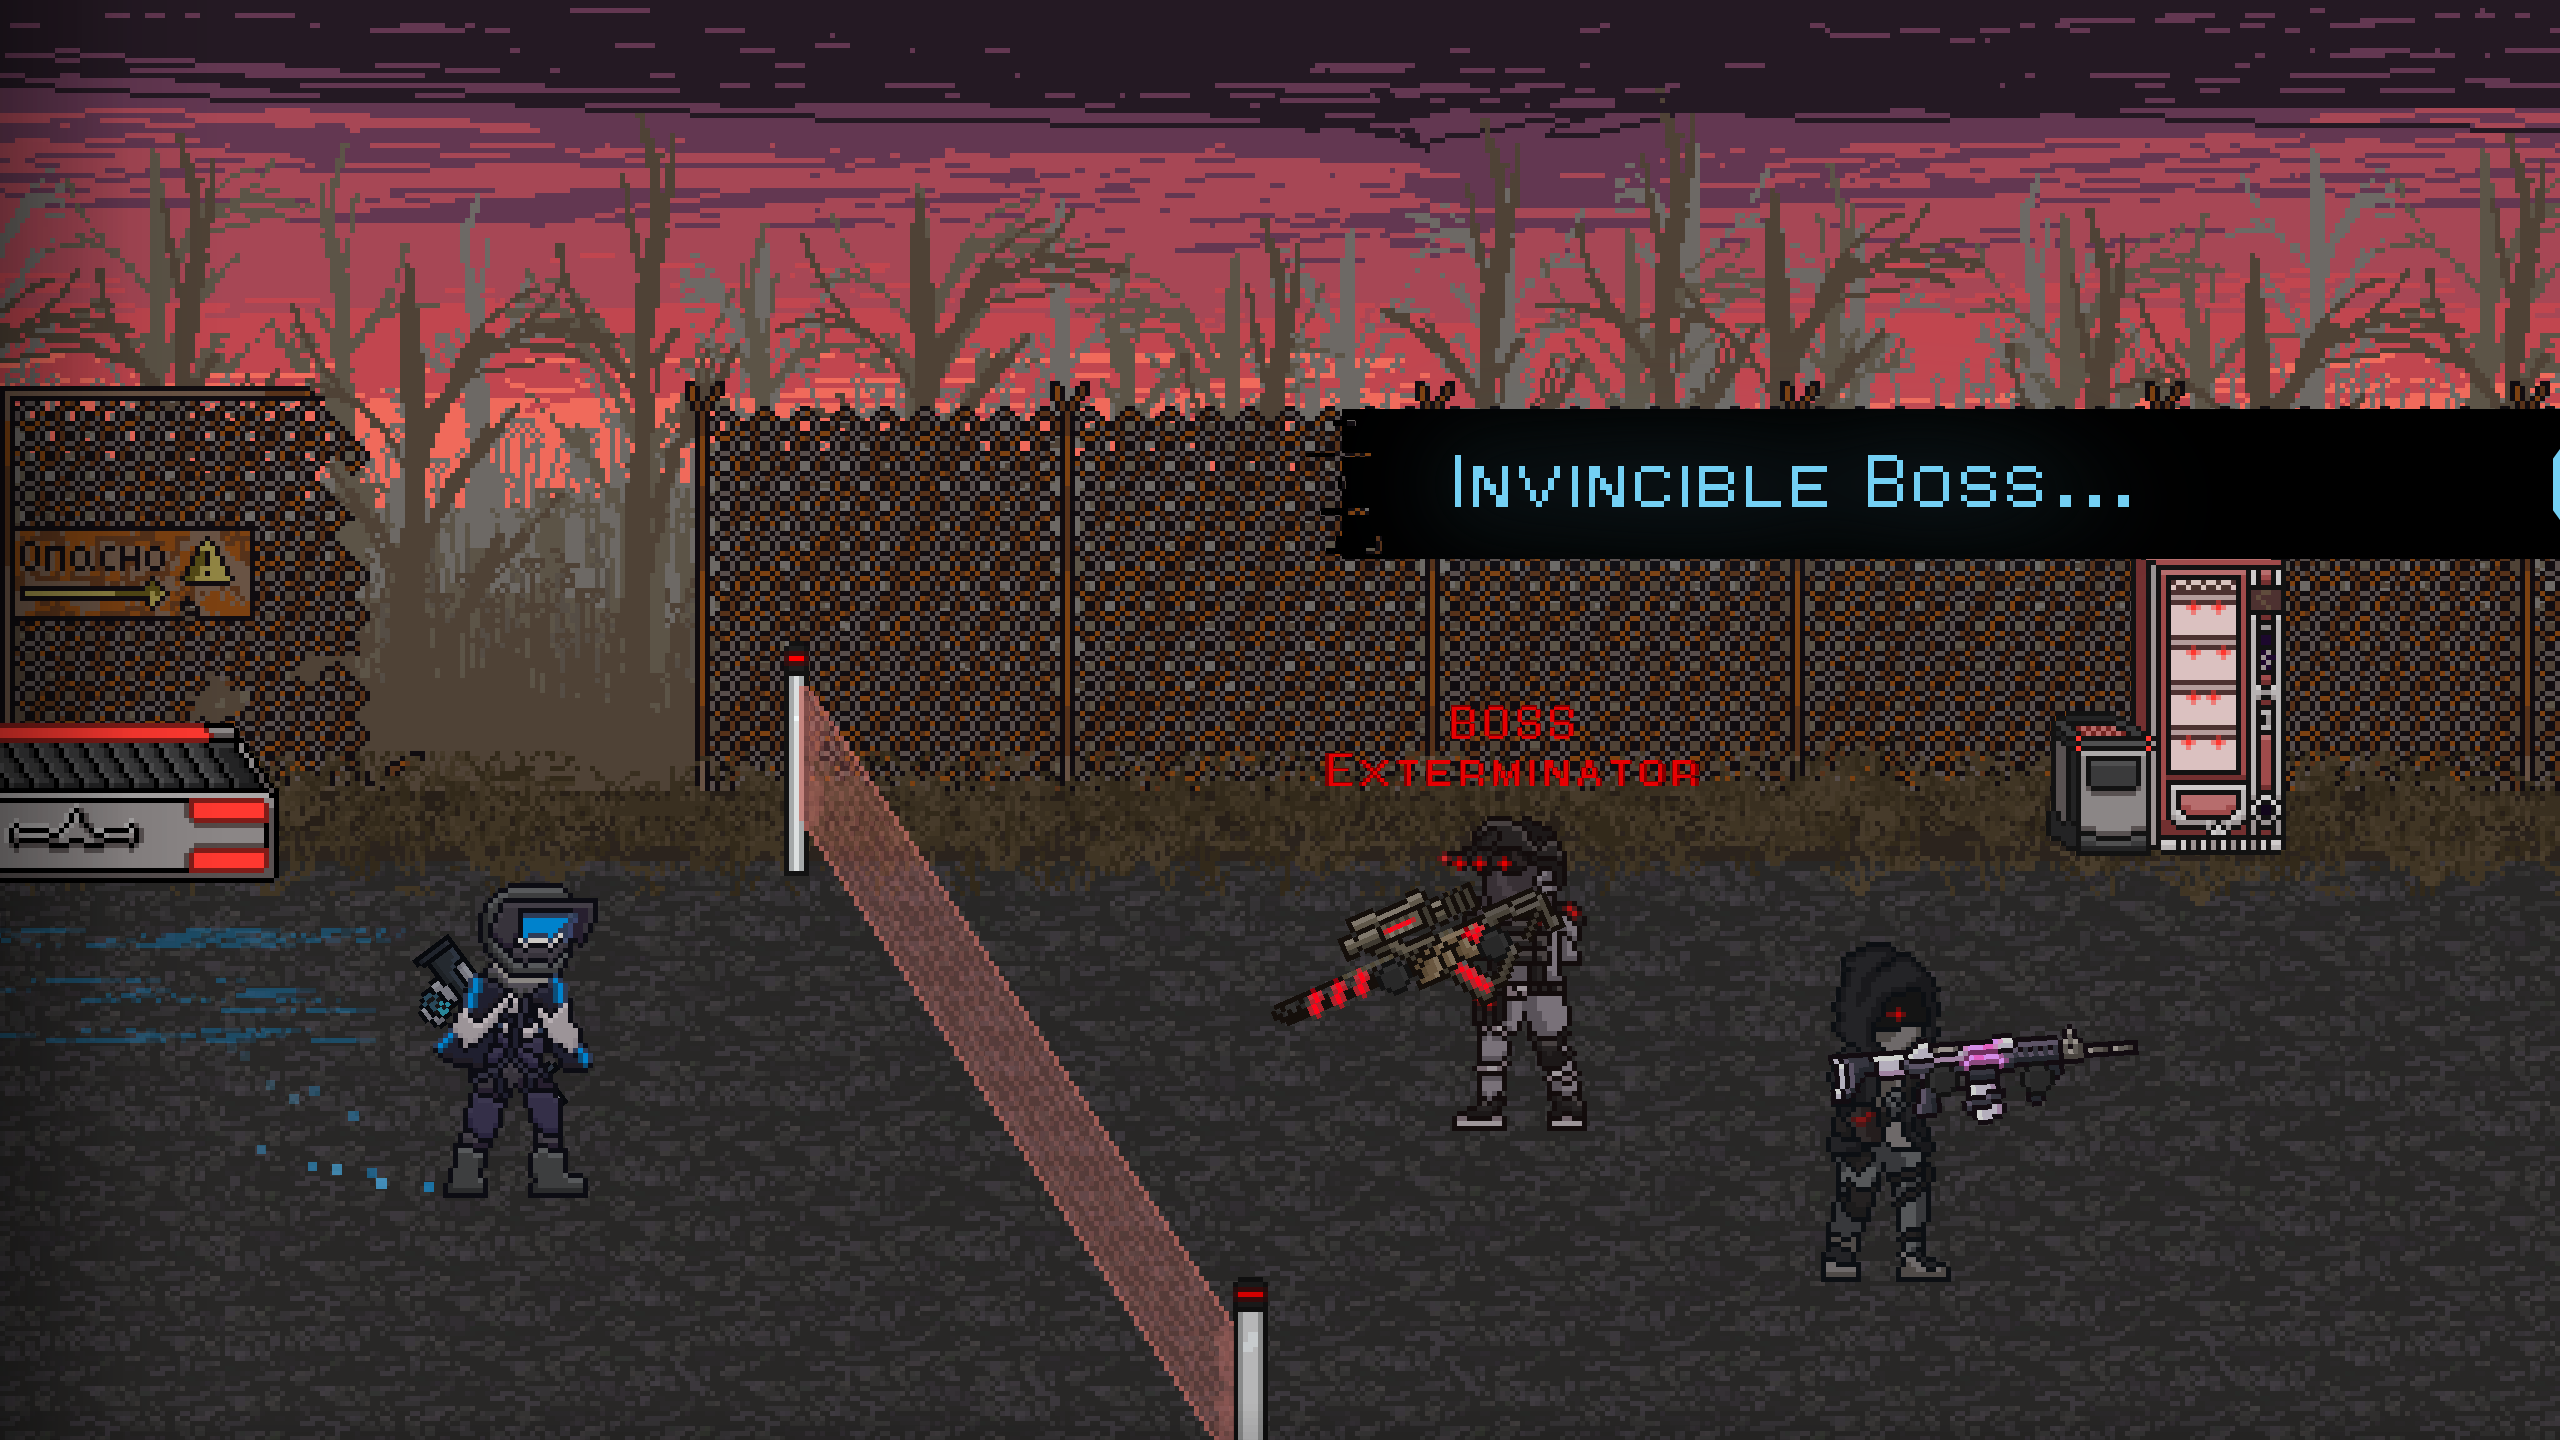 Invincible Boss...